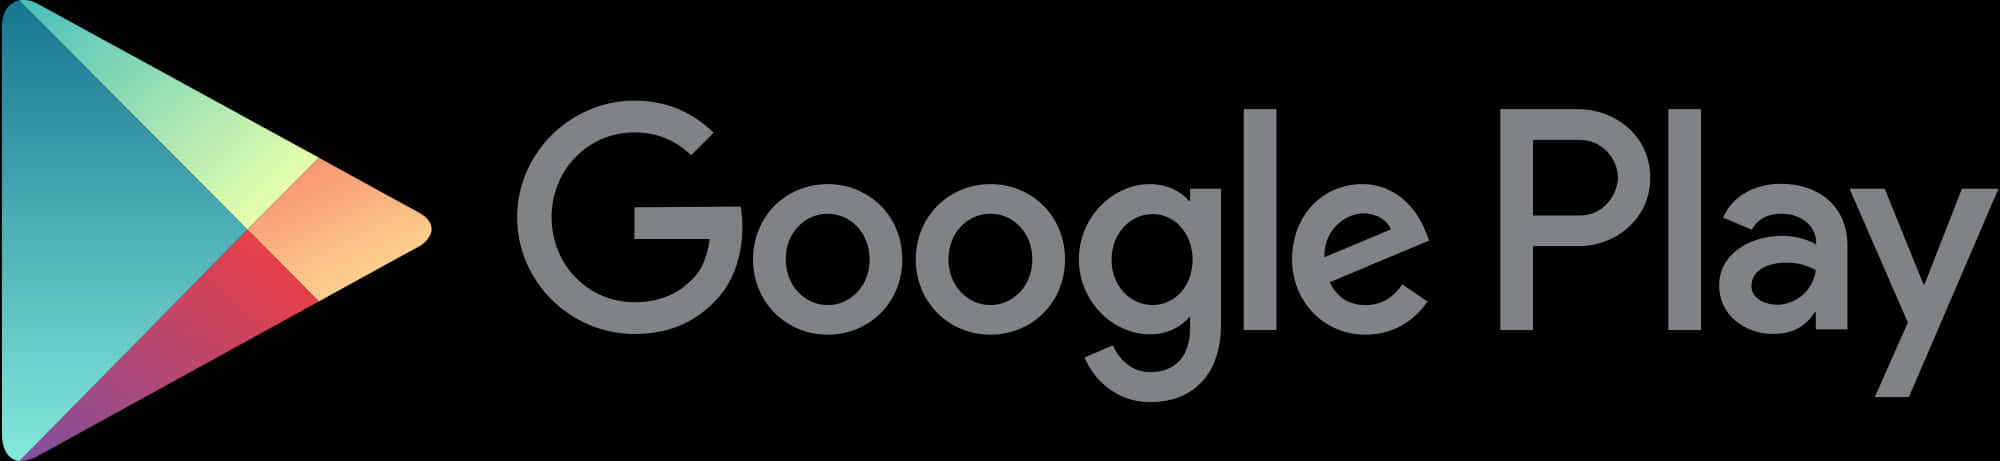 Google Play Store Logo PNG